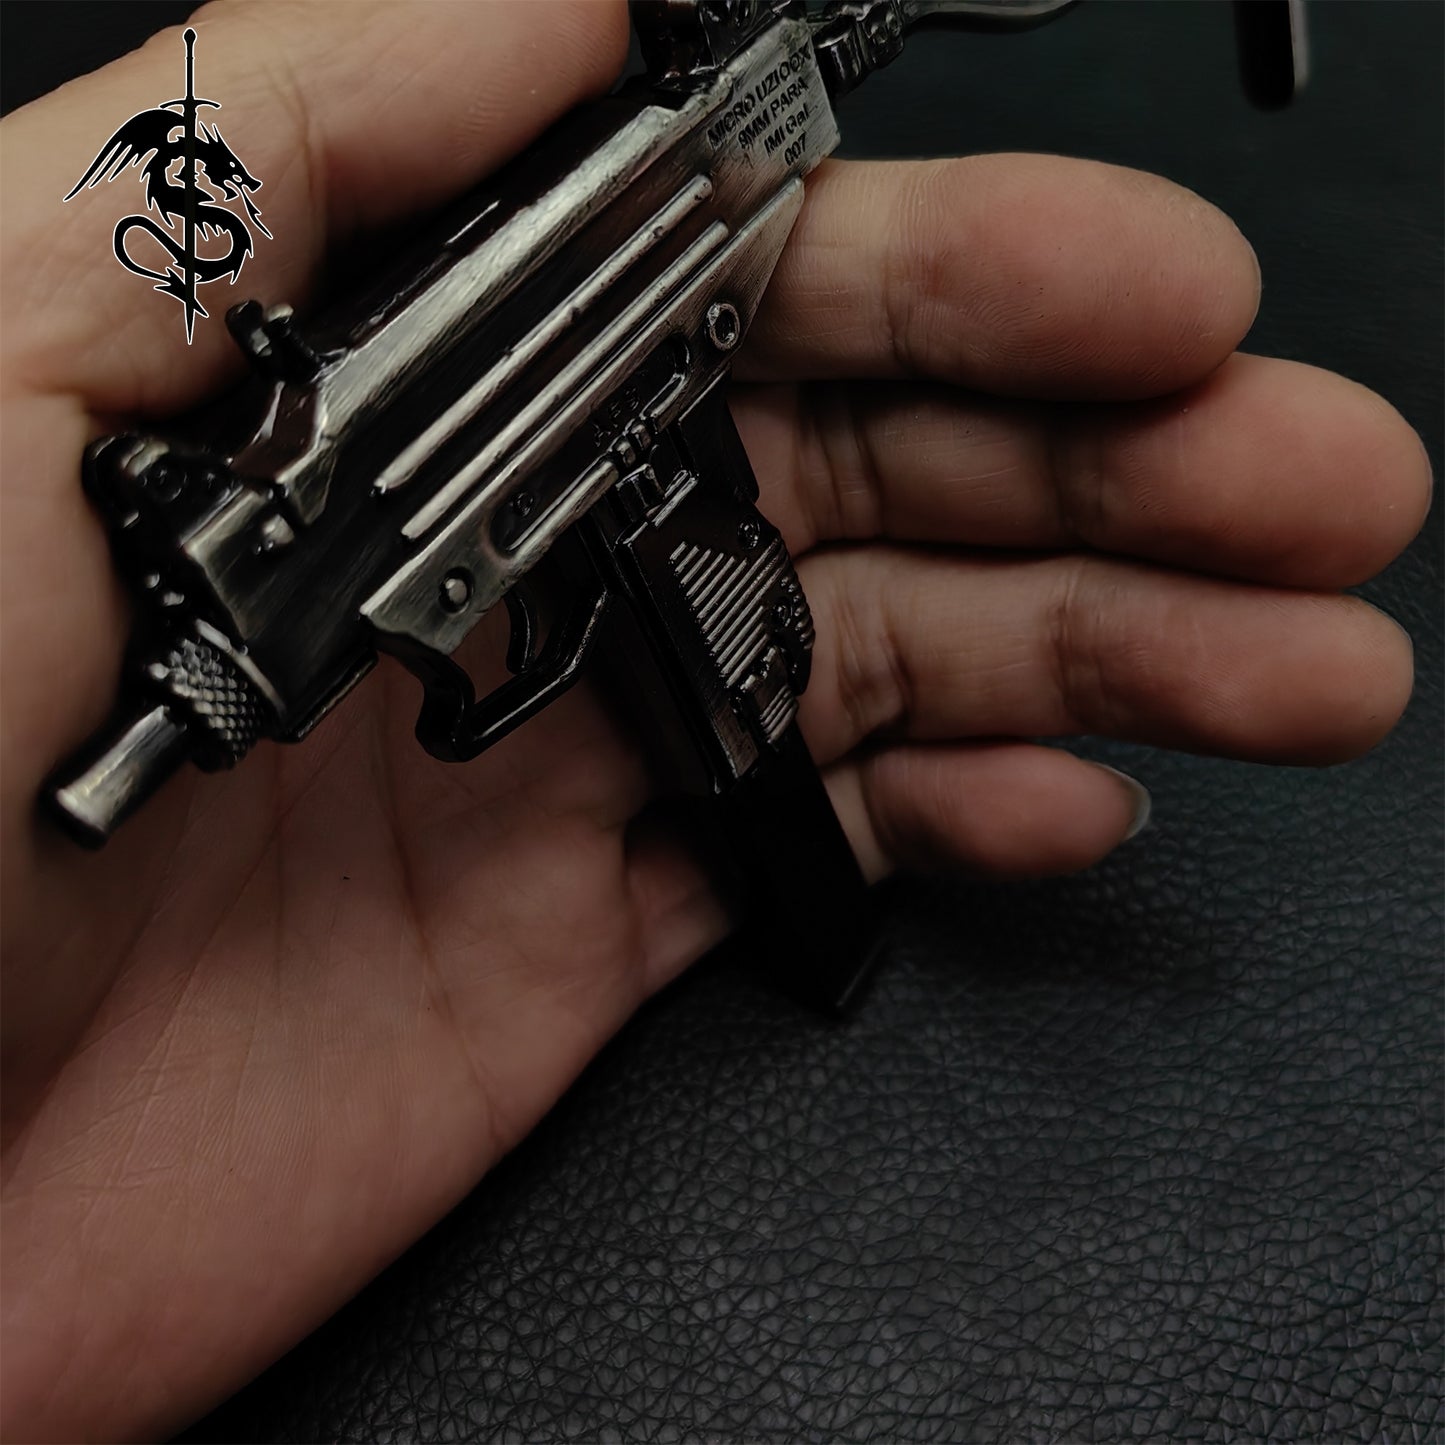 Metal UZI Submachine Gun Miniature Small Gun Toy Mini Replica